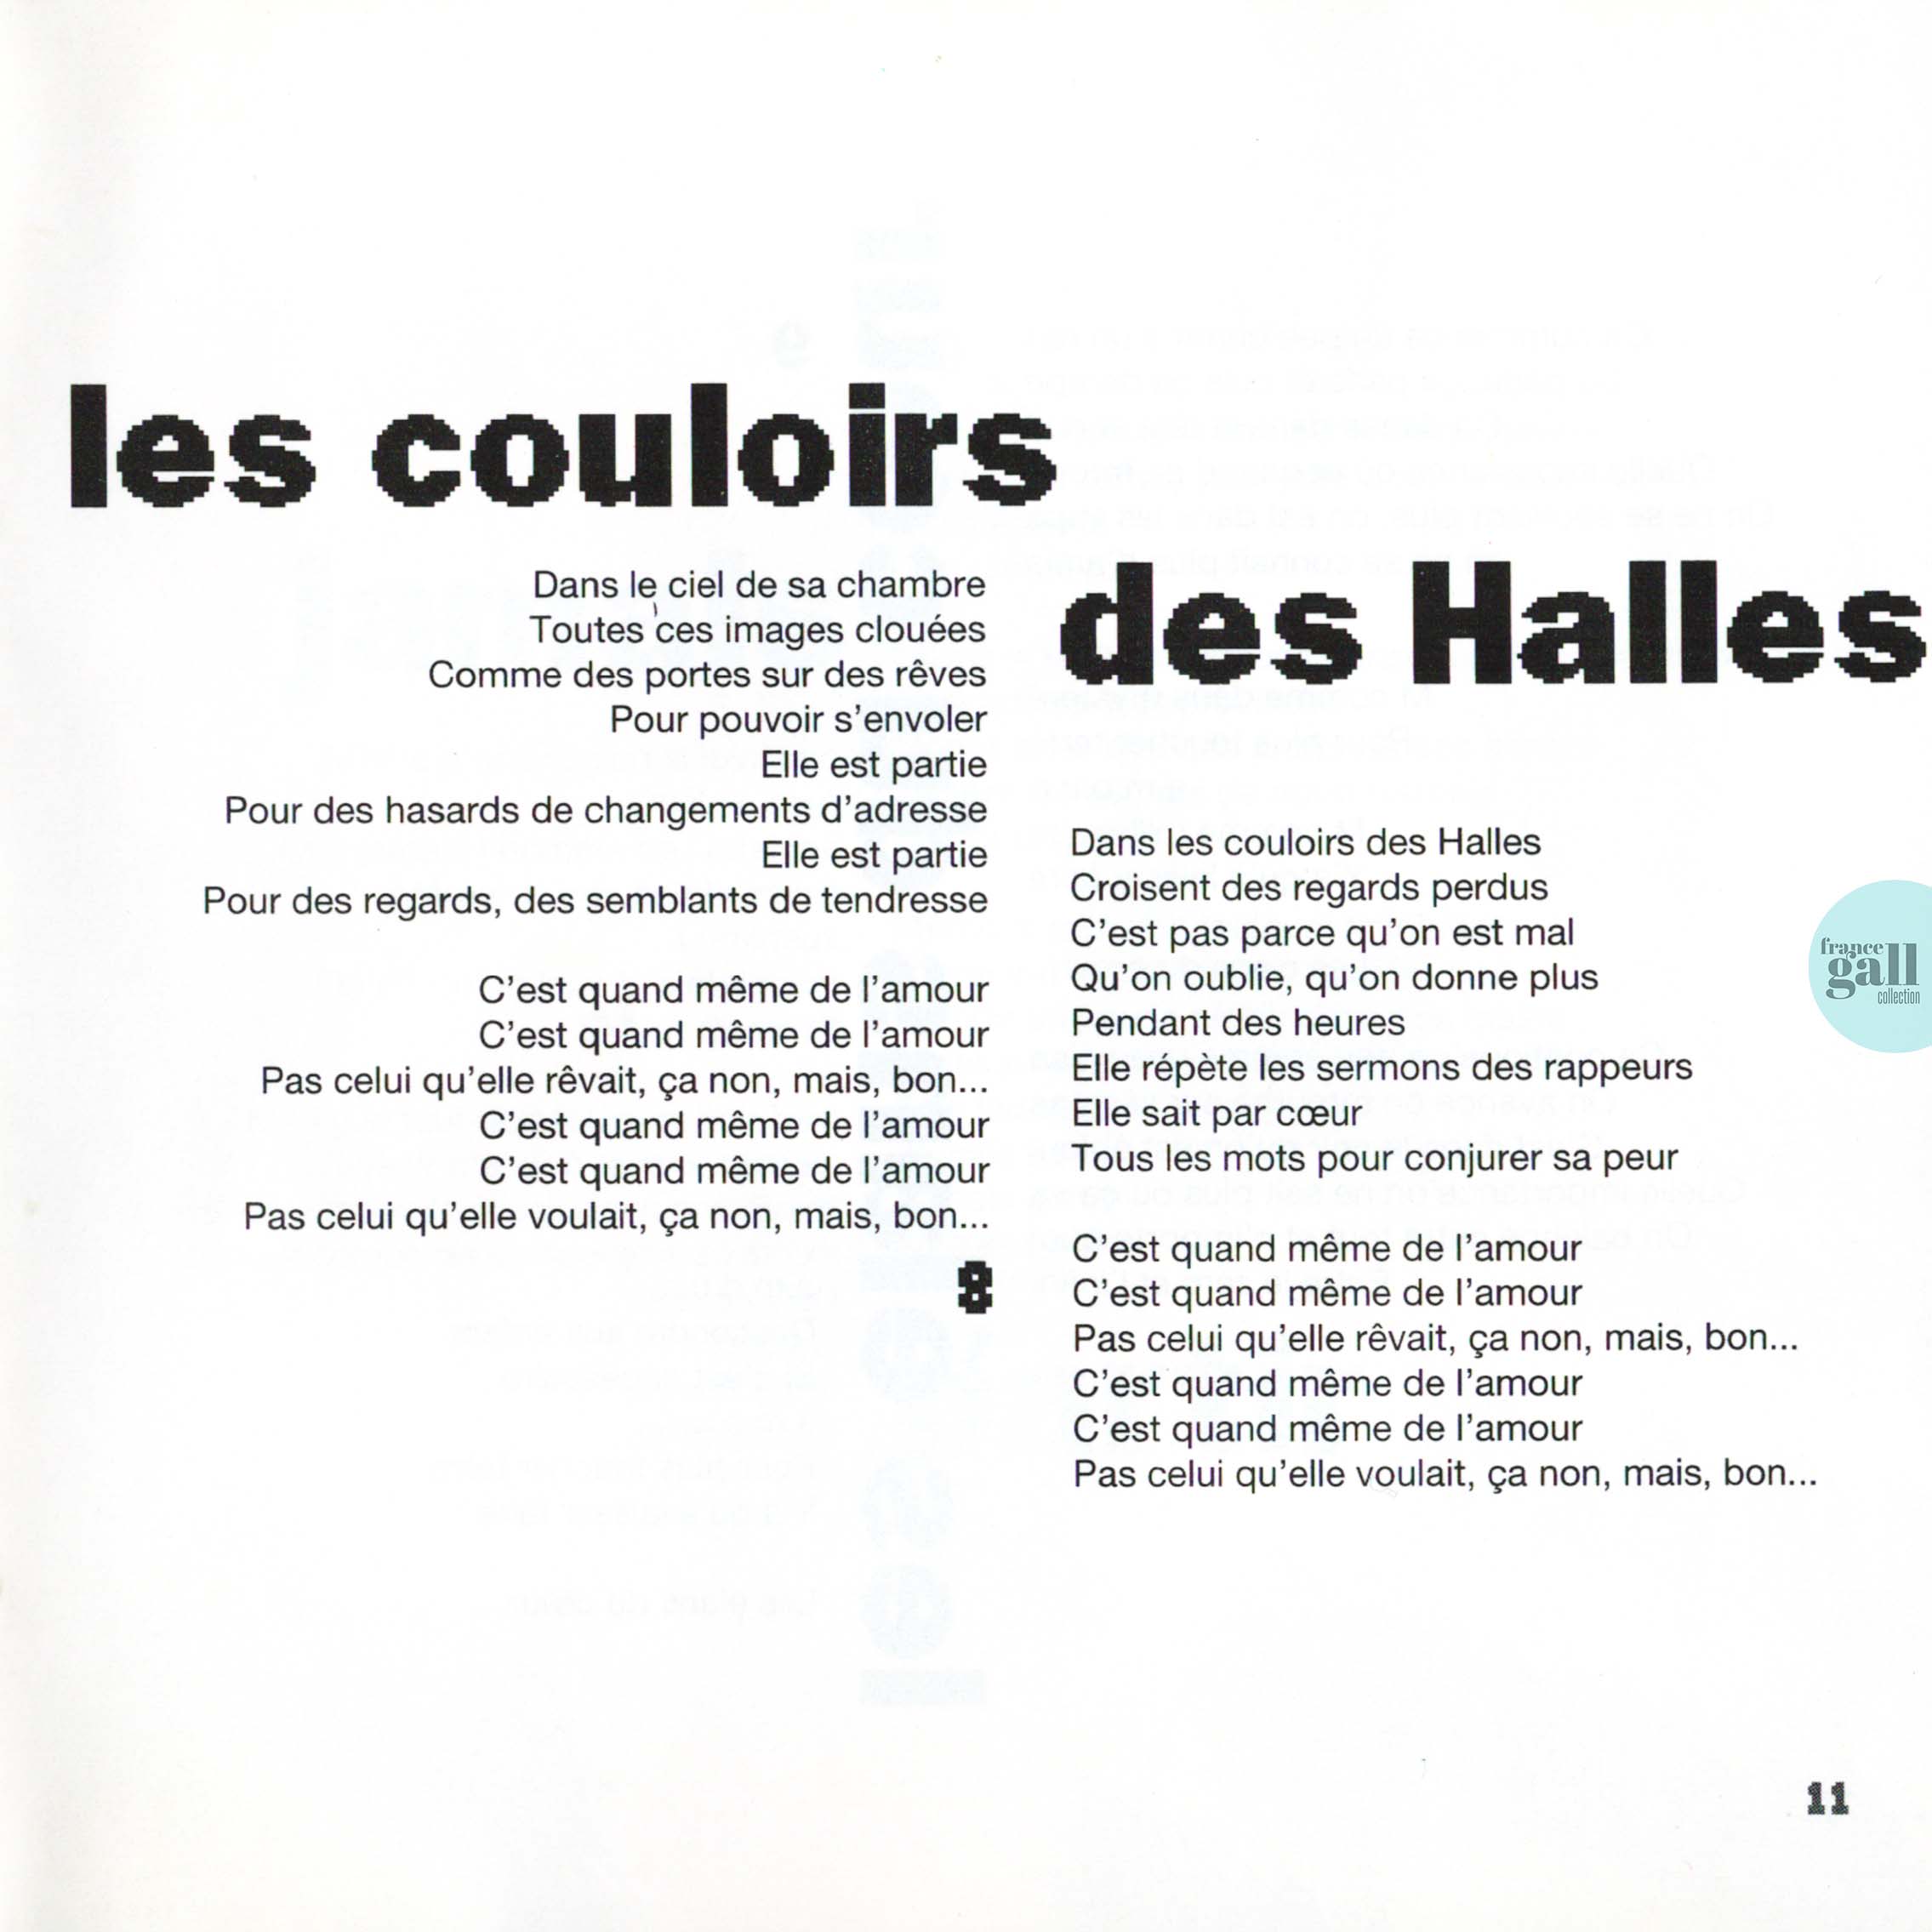 CD - 7e album - Double jeu - 1992 - France Gall Collection